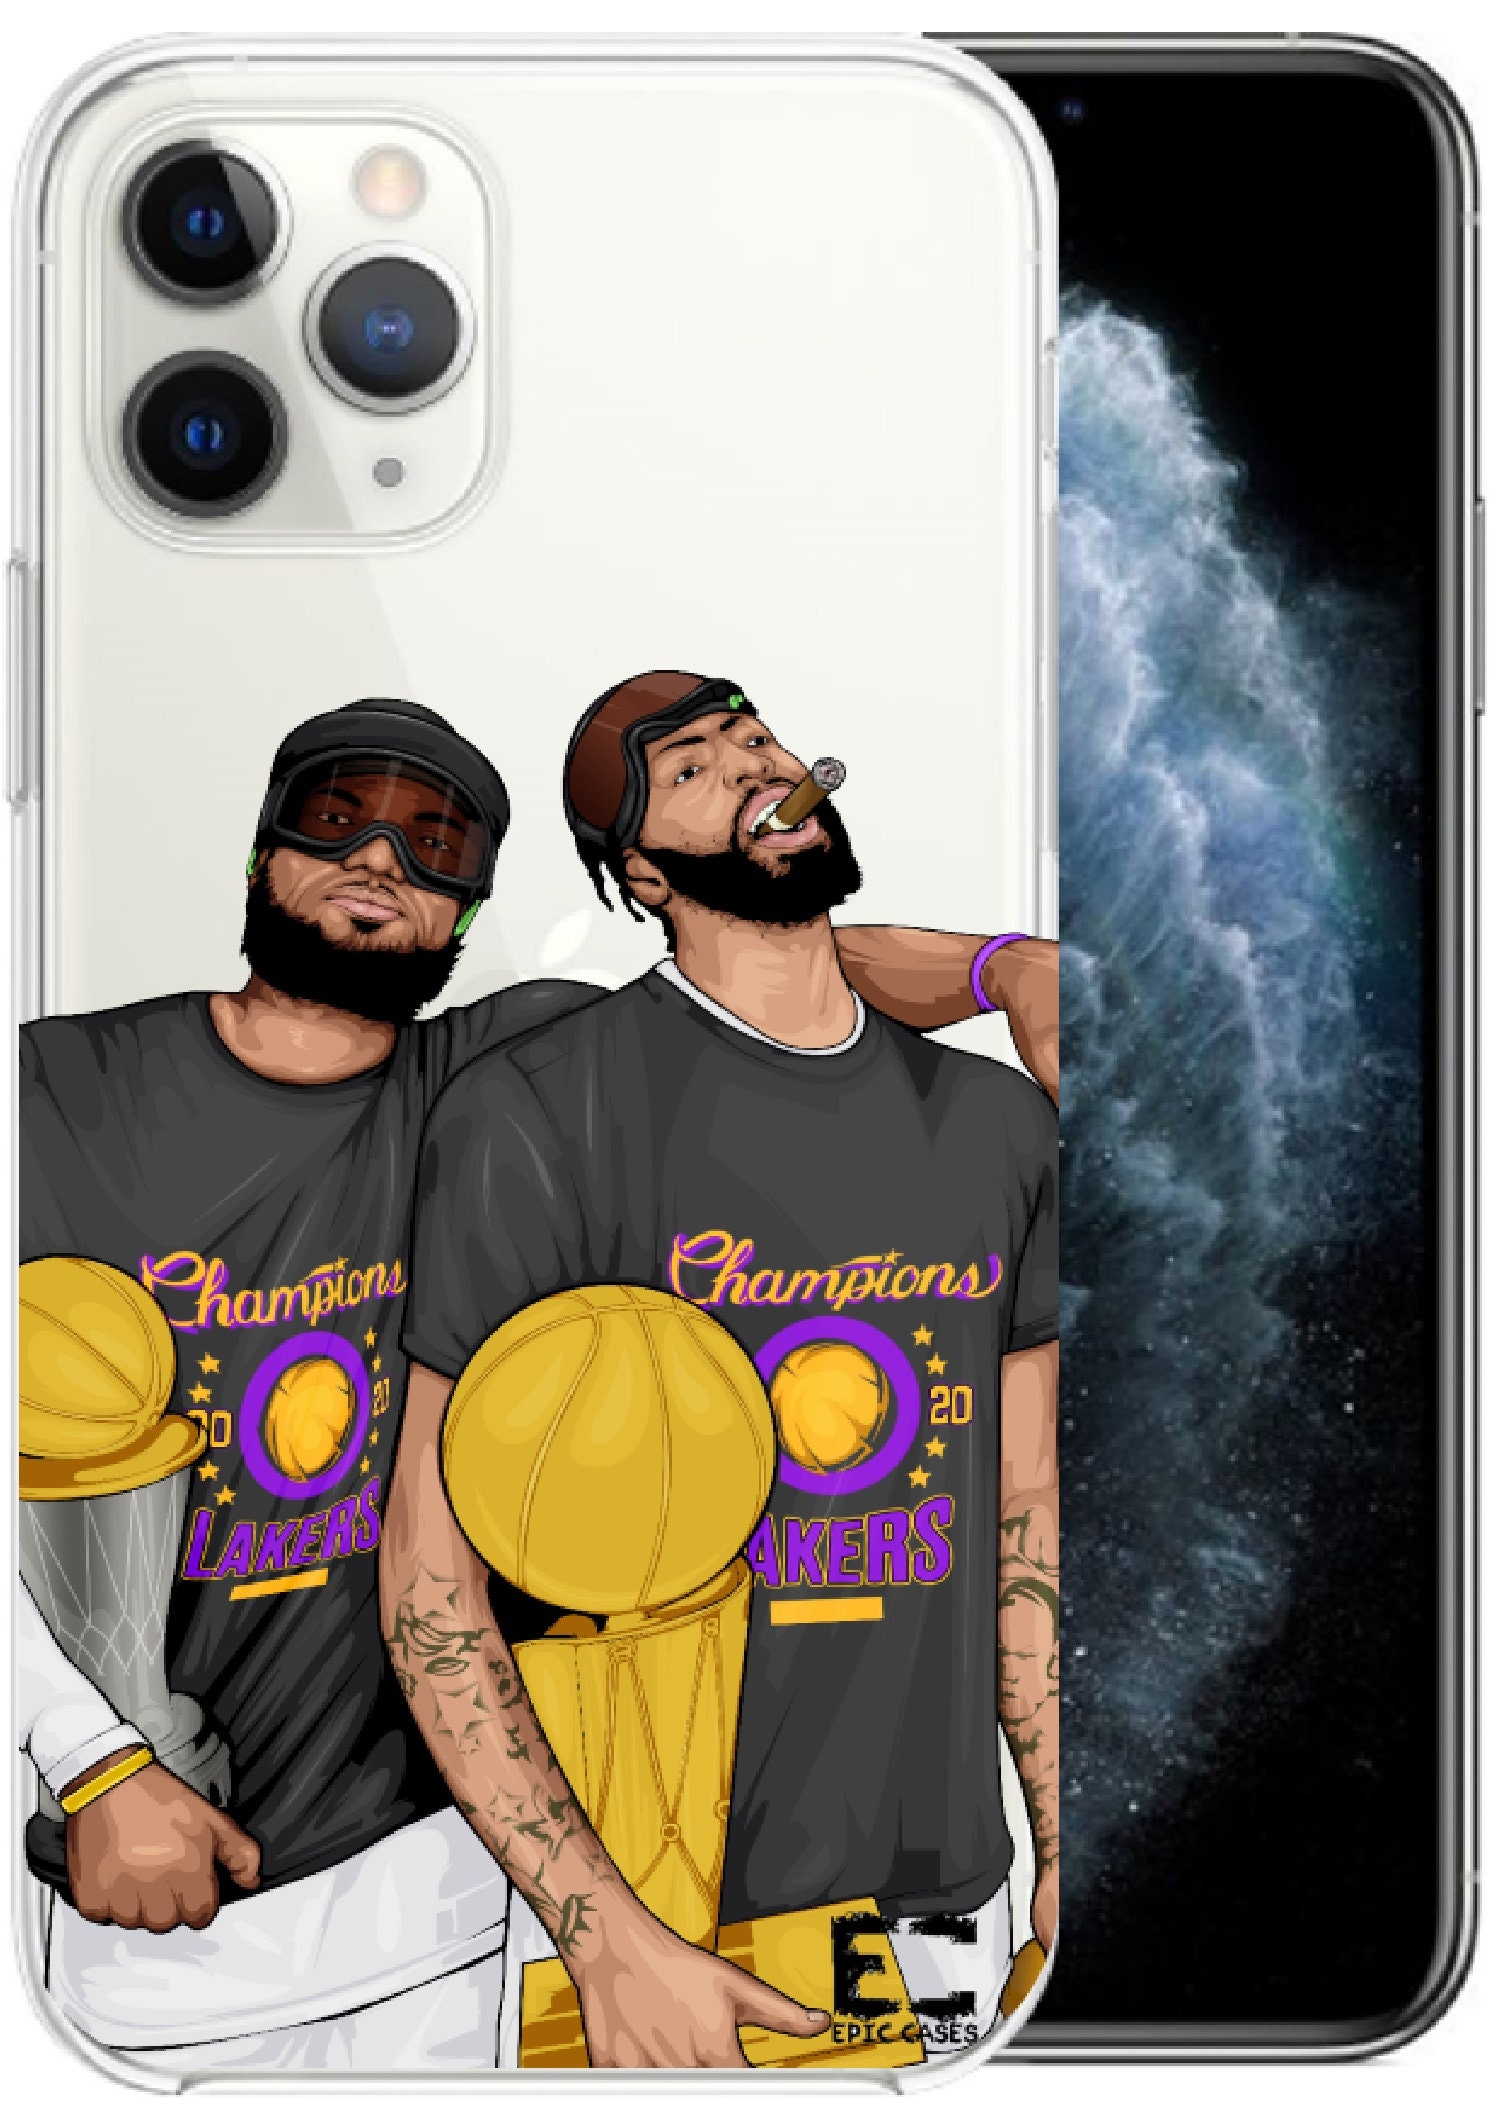 NBA BASKETBALL X LOUIS VUITTON 2 iPhone 15 Pro Max Case Cover